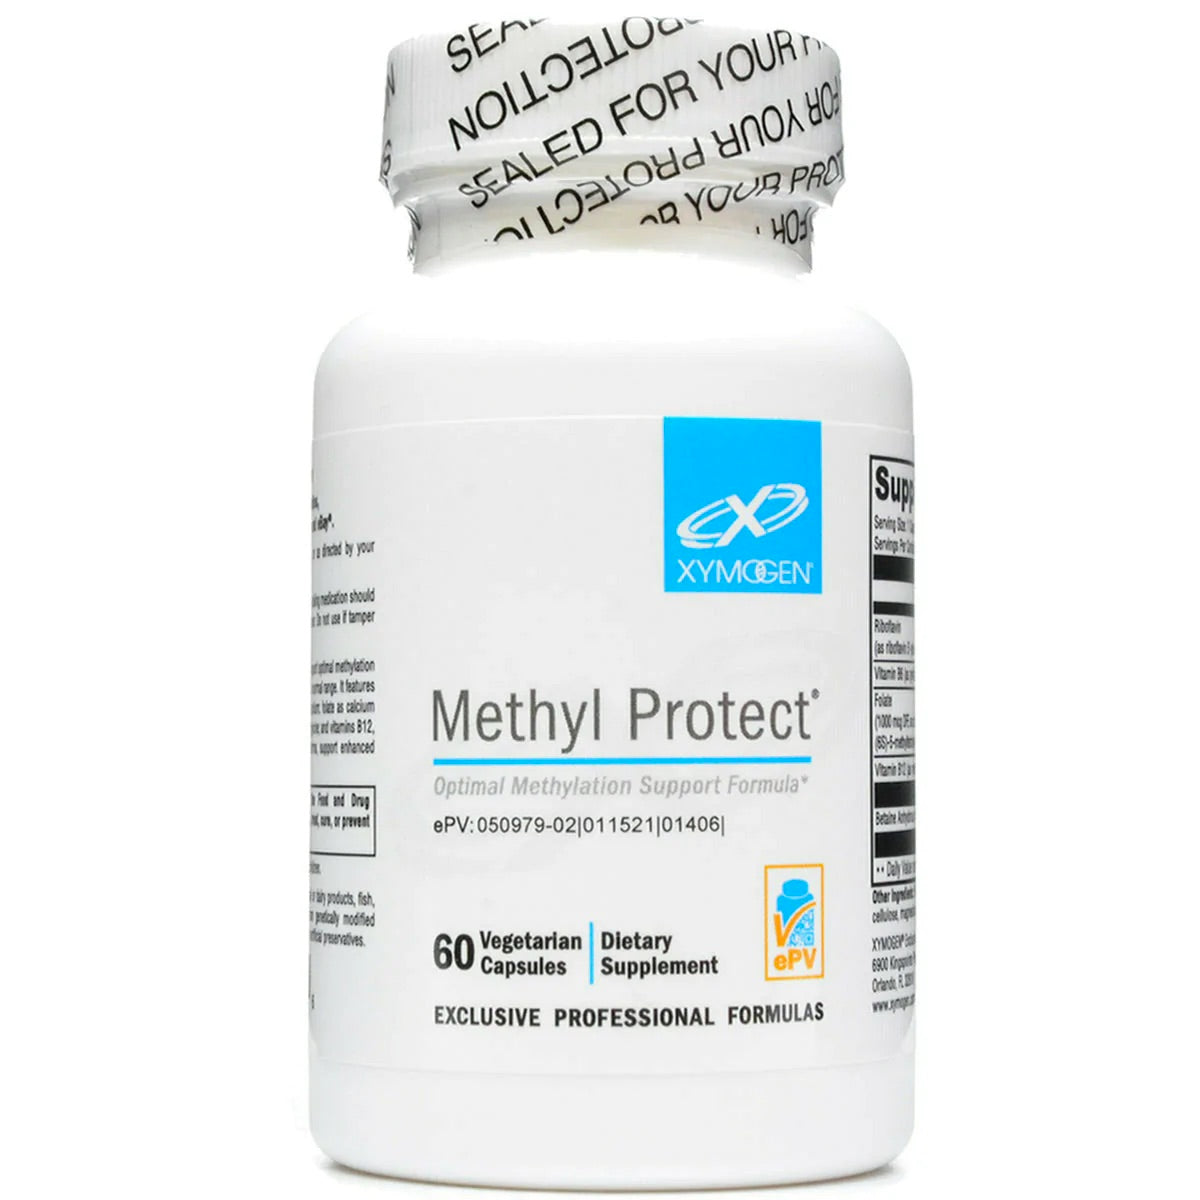 Xymogen Methyl Protect 60 Capsules - ePothex